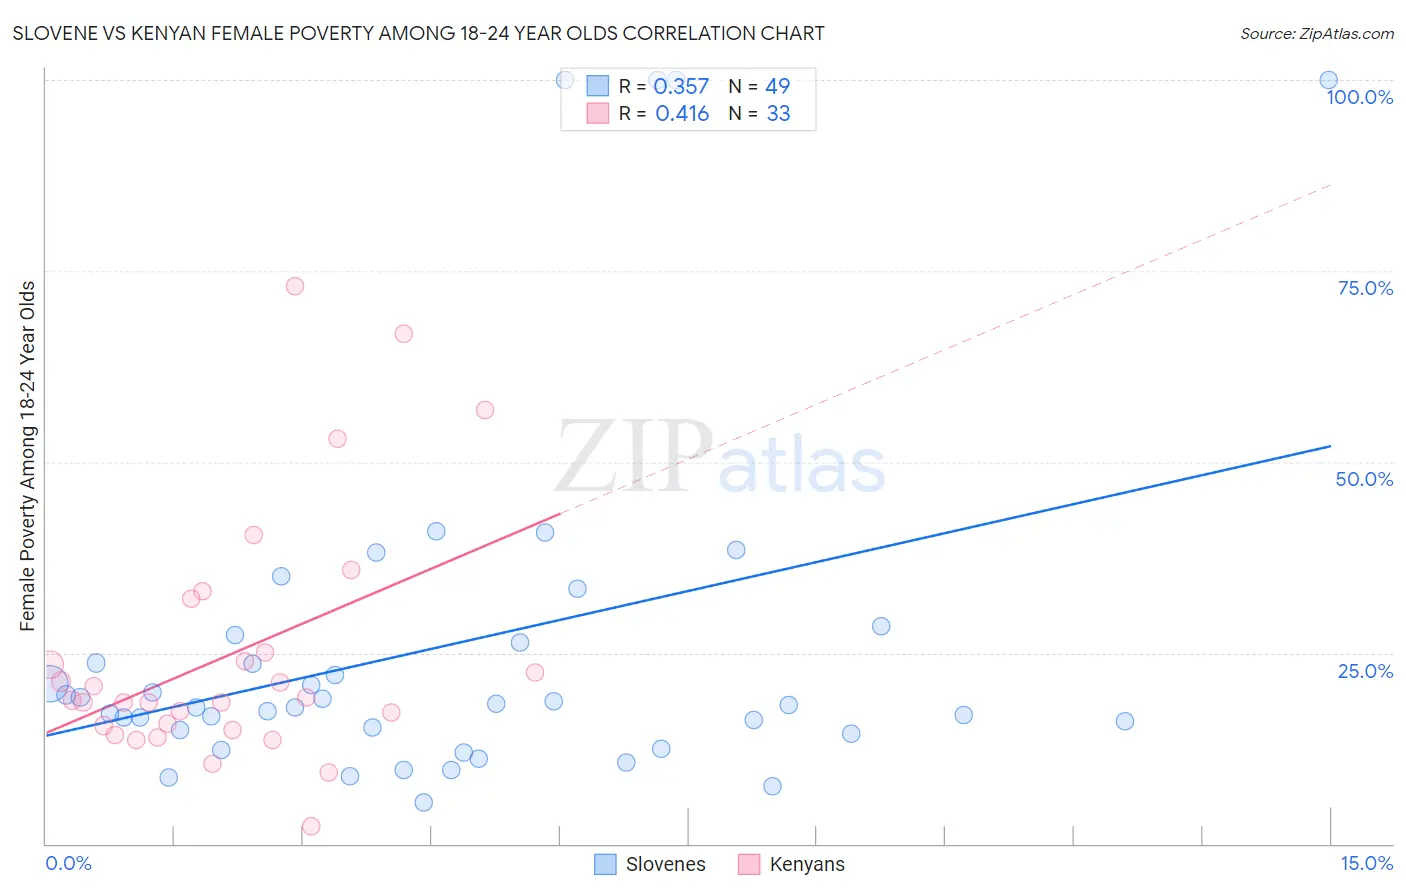 Slovene vs Kenyan Female Poverty Among 18-24 Year Olds